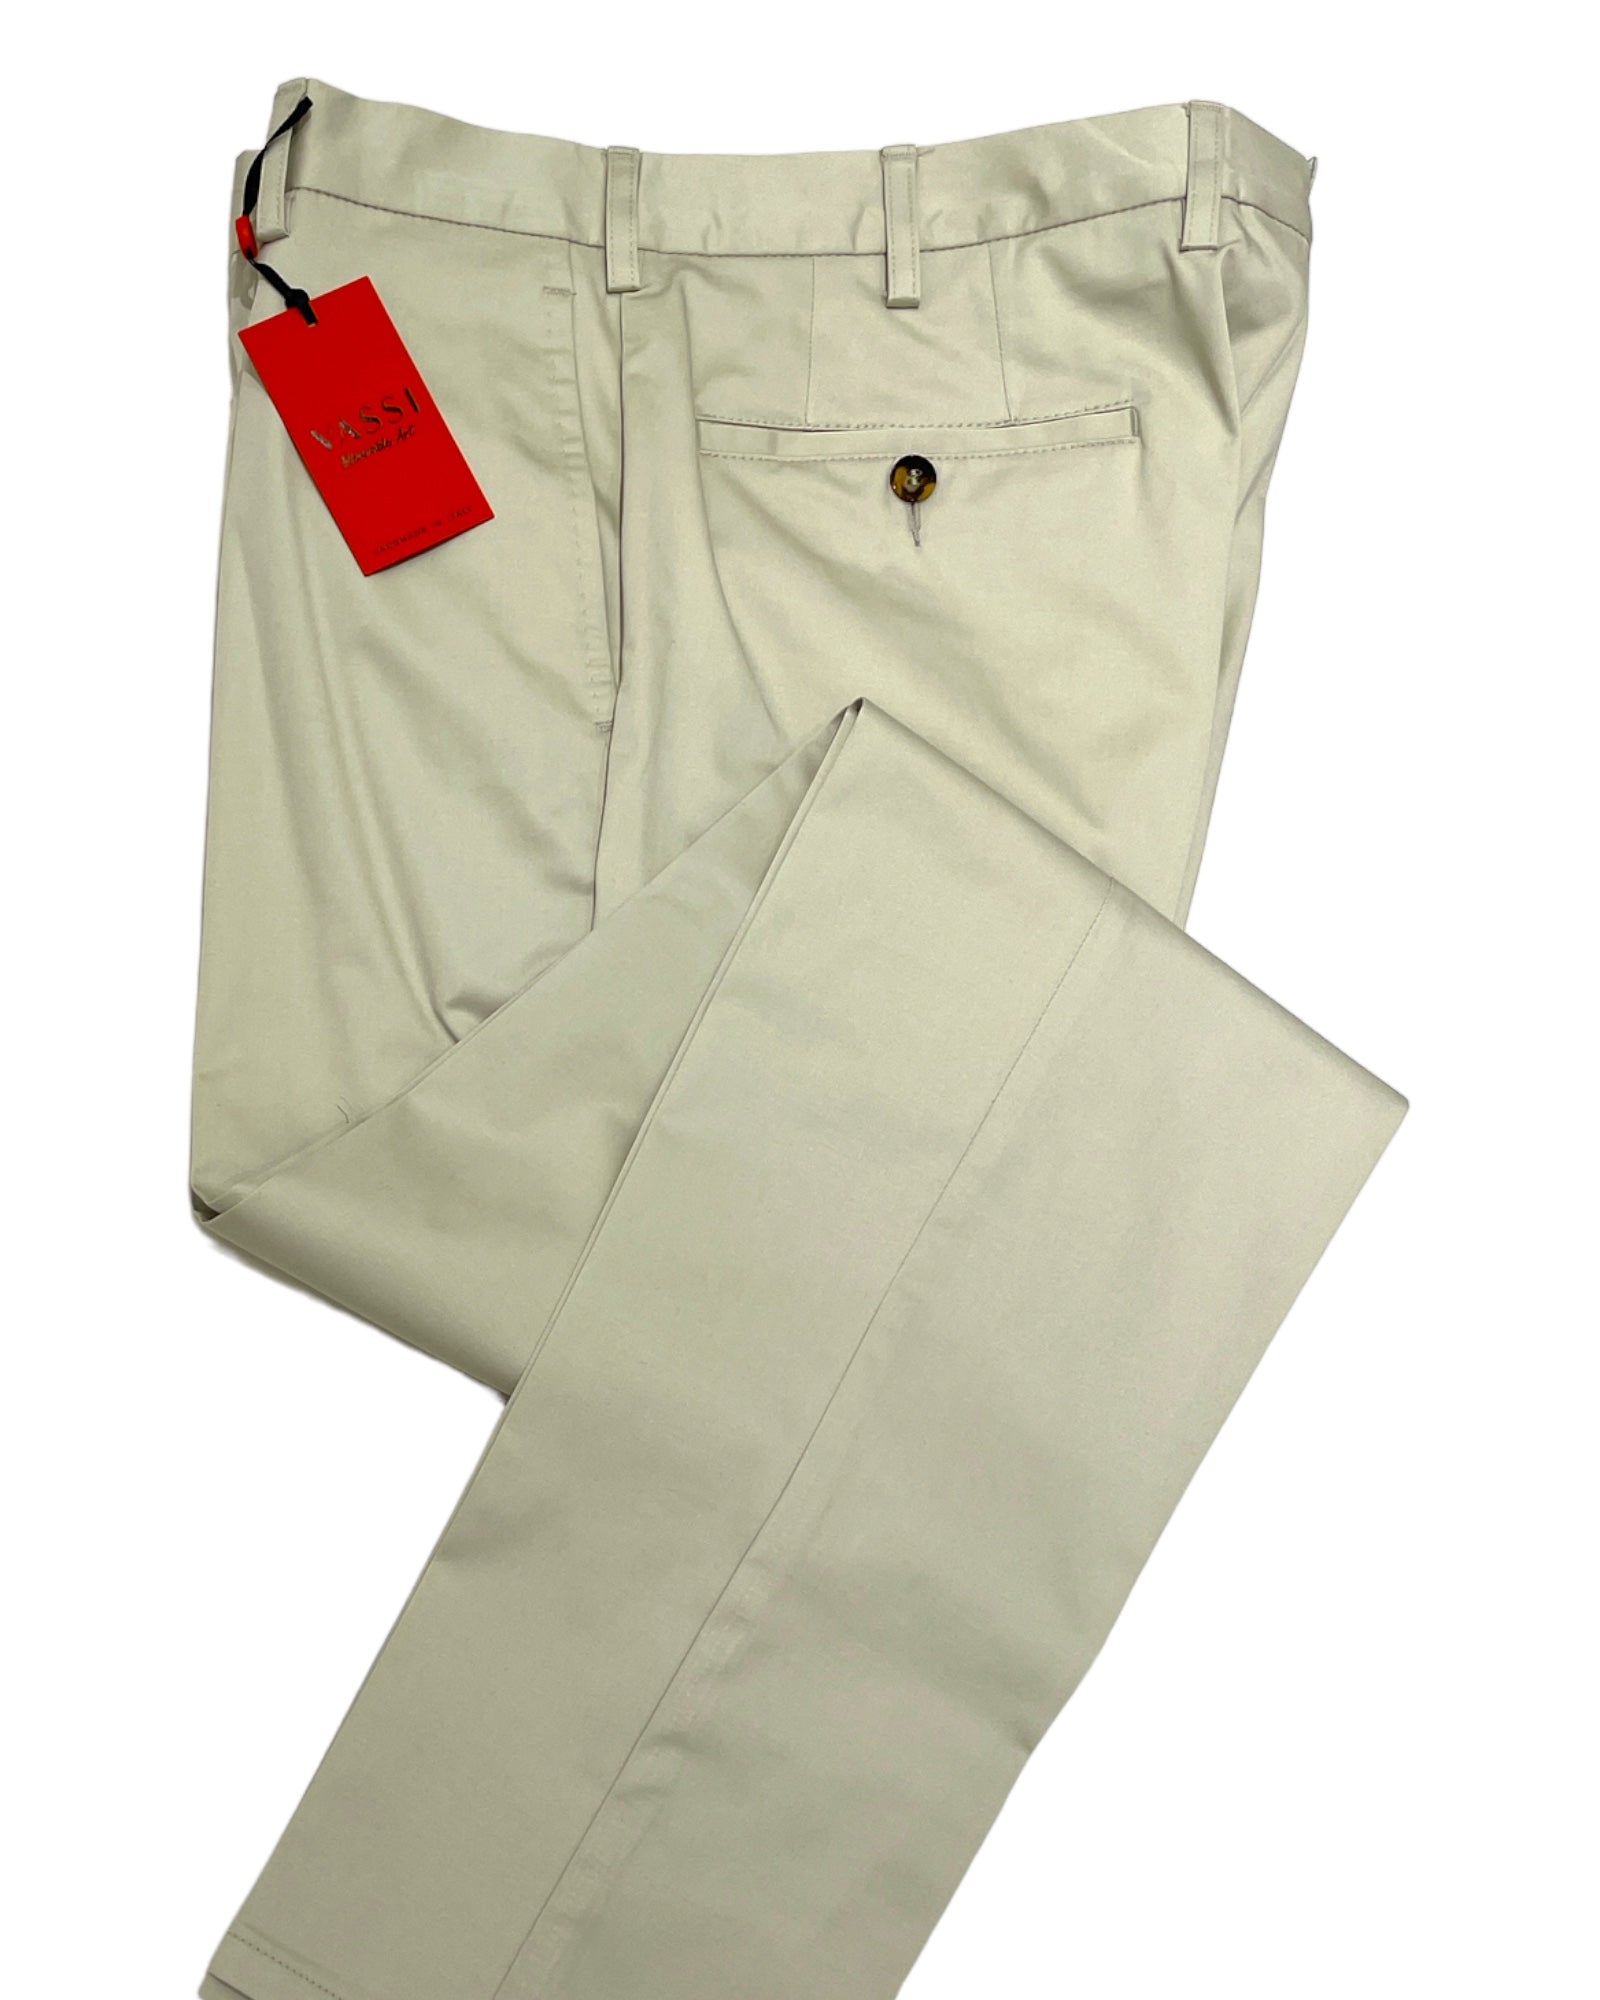 VASSI Flat Front Sartorial Stretch-Cotton Trousers - Manchester Tan CASUAL PANTS50 EU